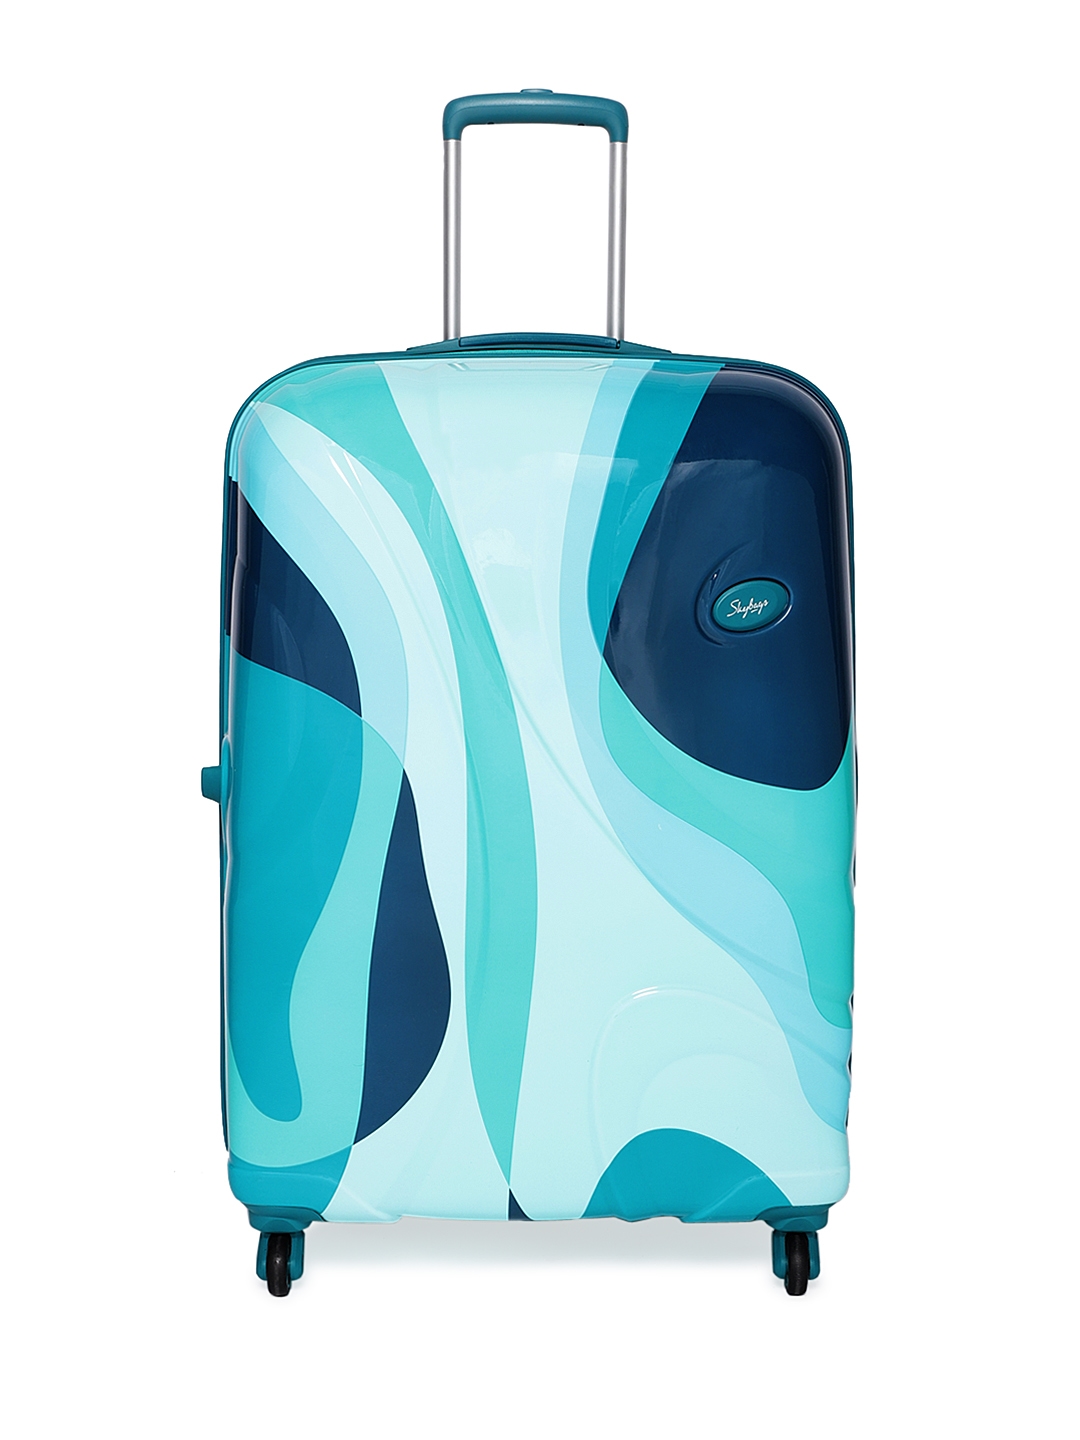 Share 140+ skybags oscar trolley bags super hot - xkldase.edu.vn